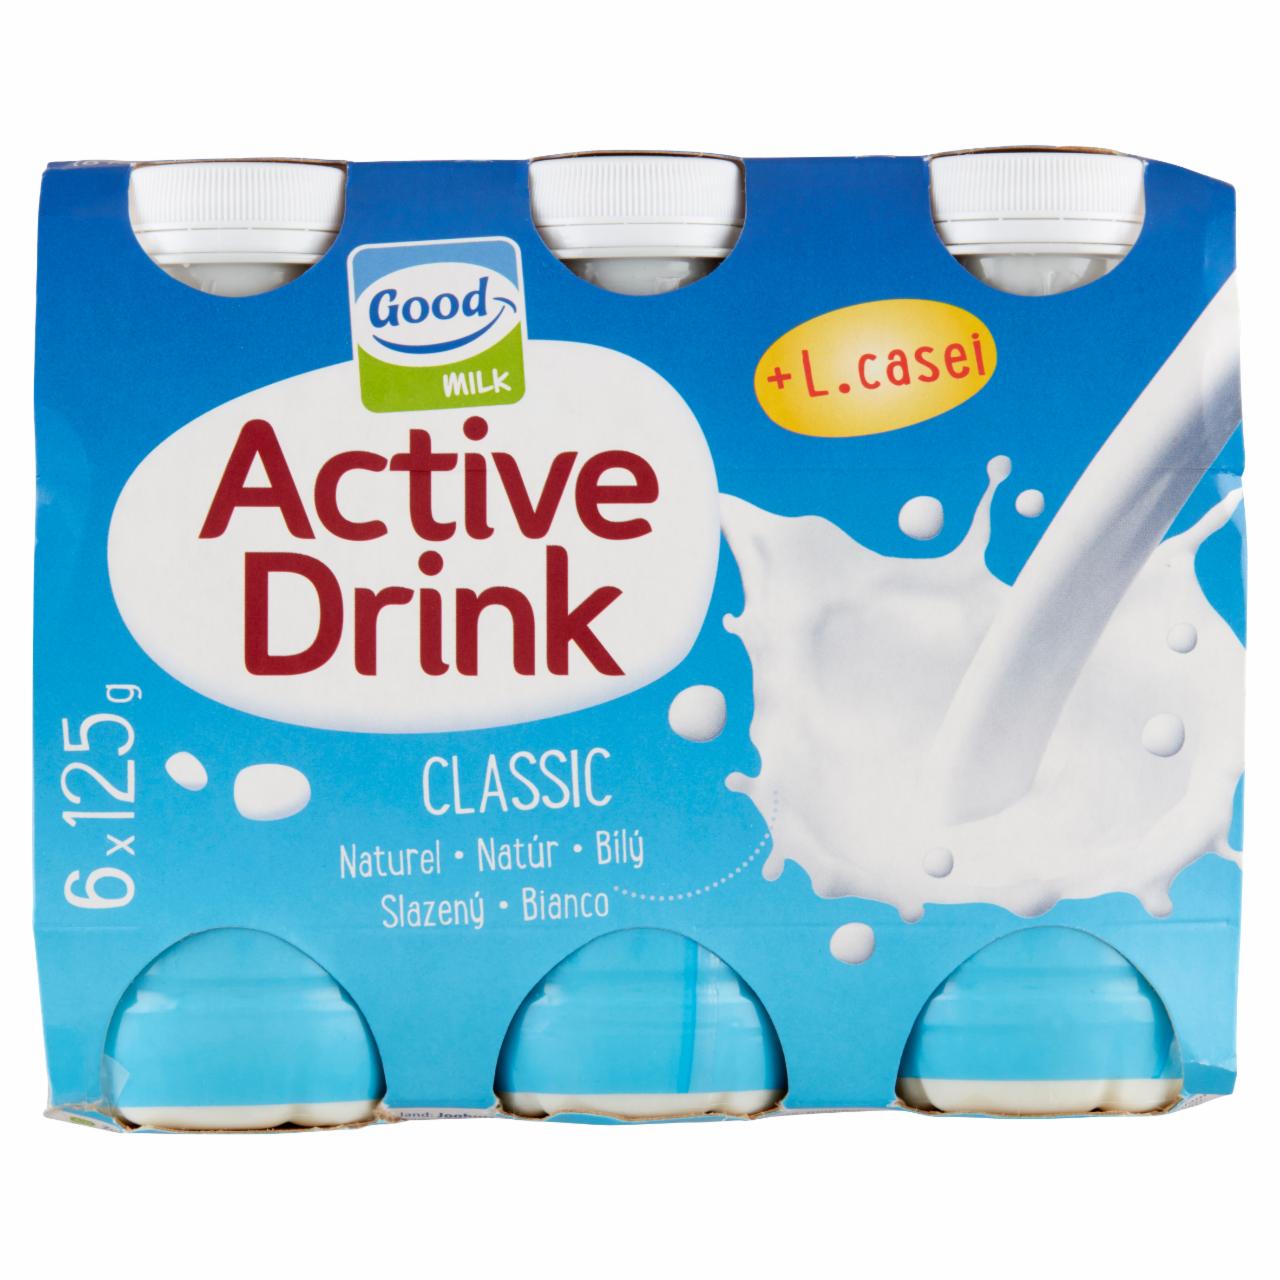 Képek - Good Milk Active Drink Classic natúr sovány joghurtital 6 x 125 g (750 g)